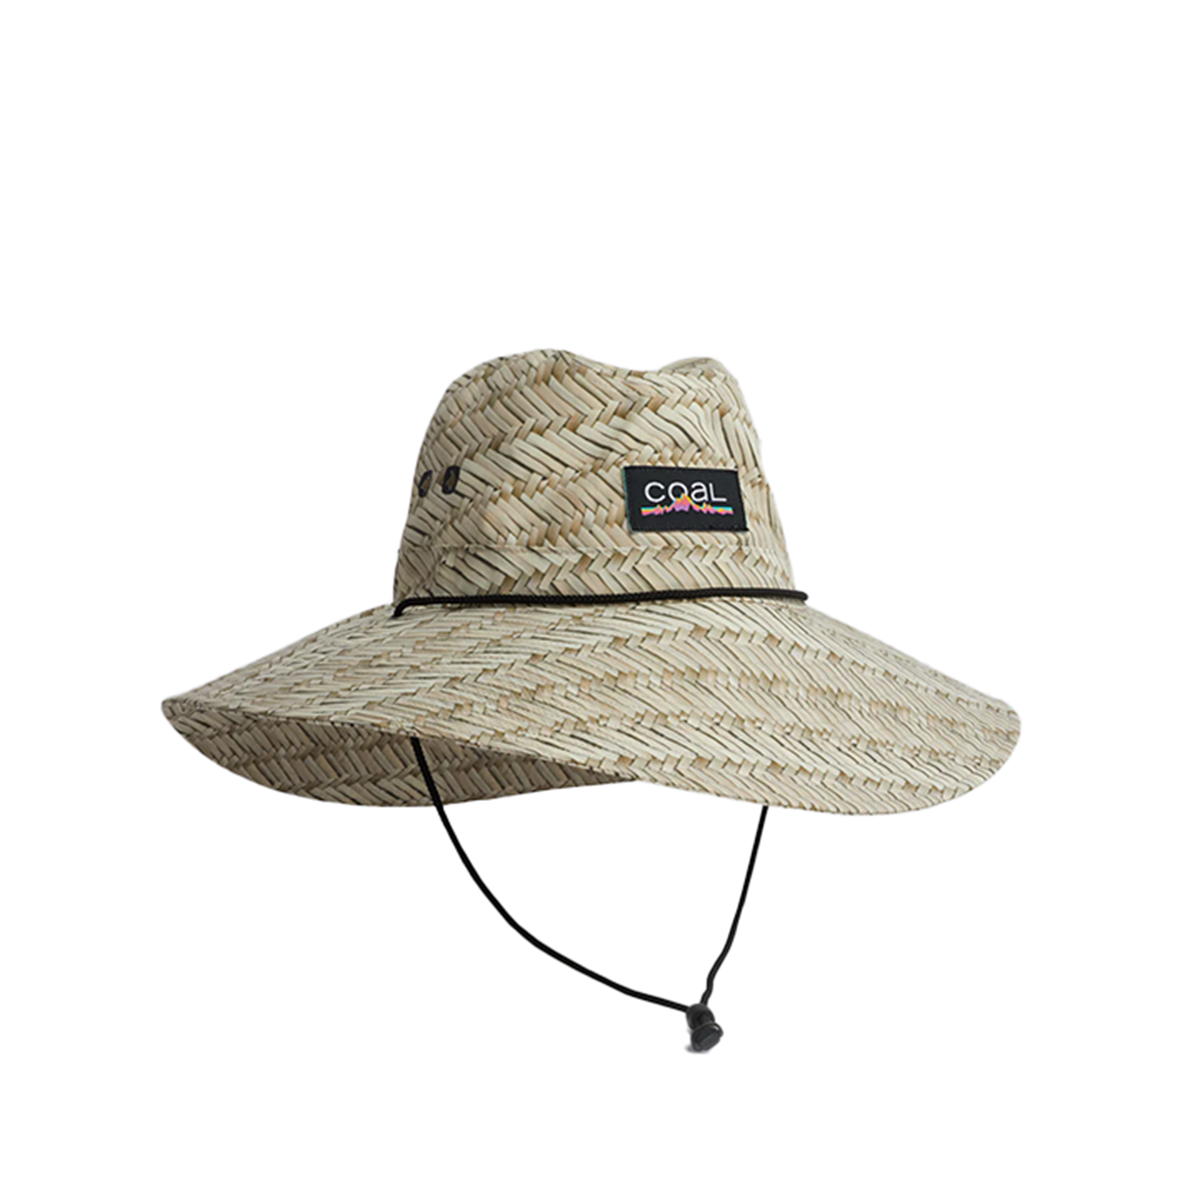 Coal Stillwater Bucket Hat - Natural